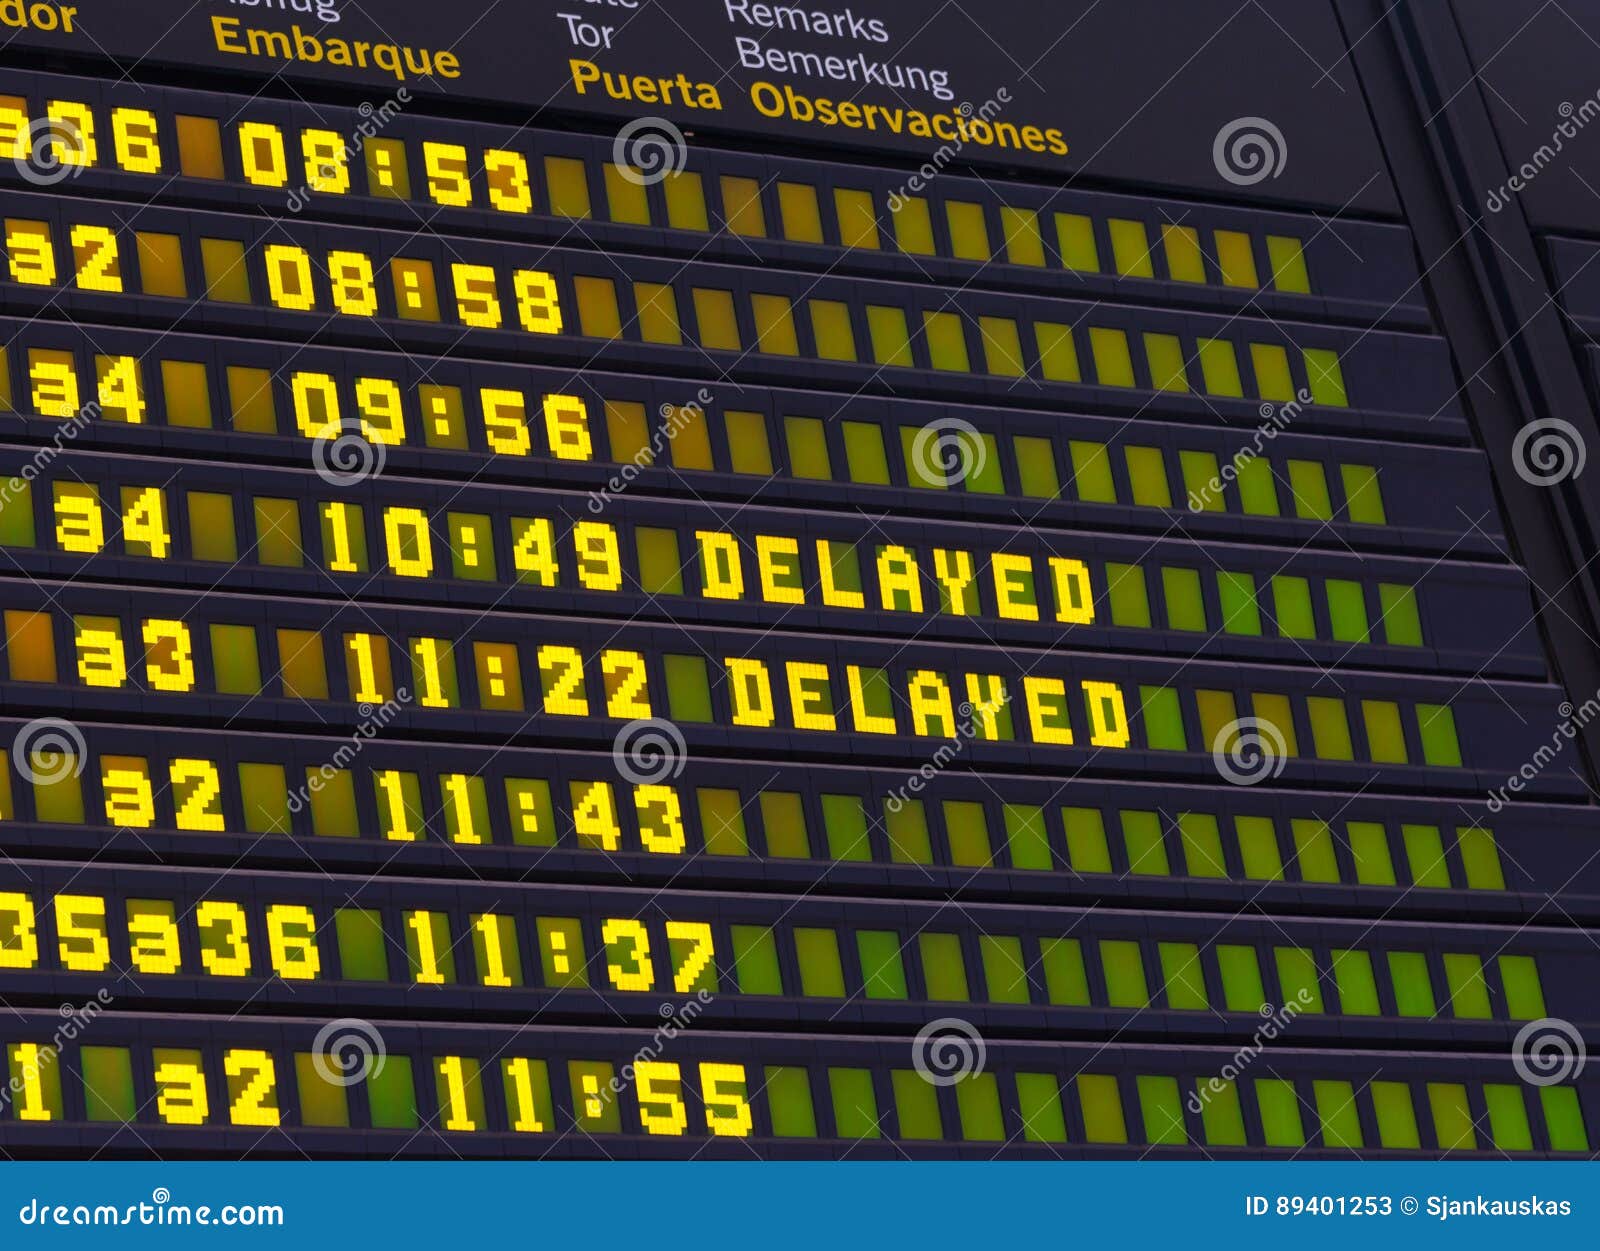 airport schedule signboard delayed flight